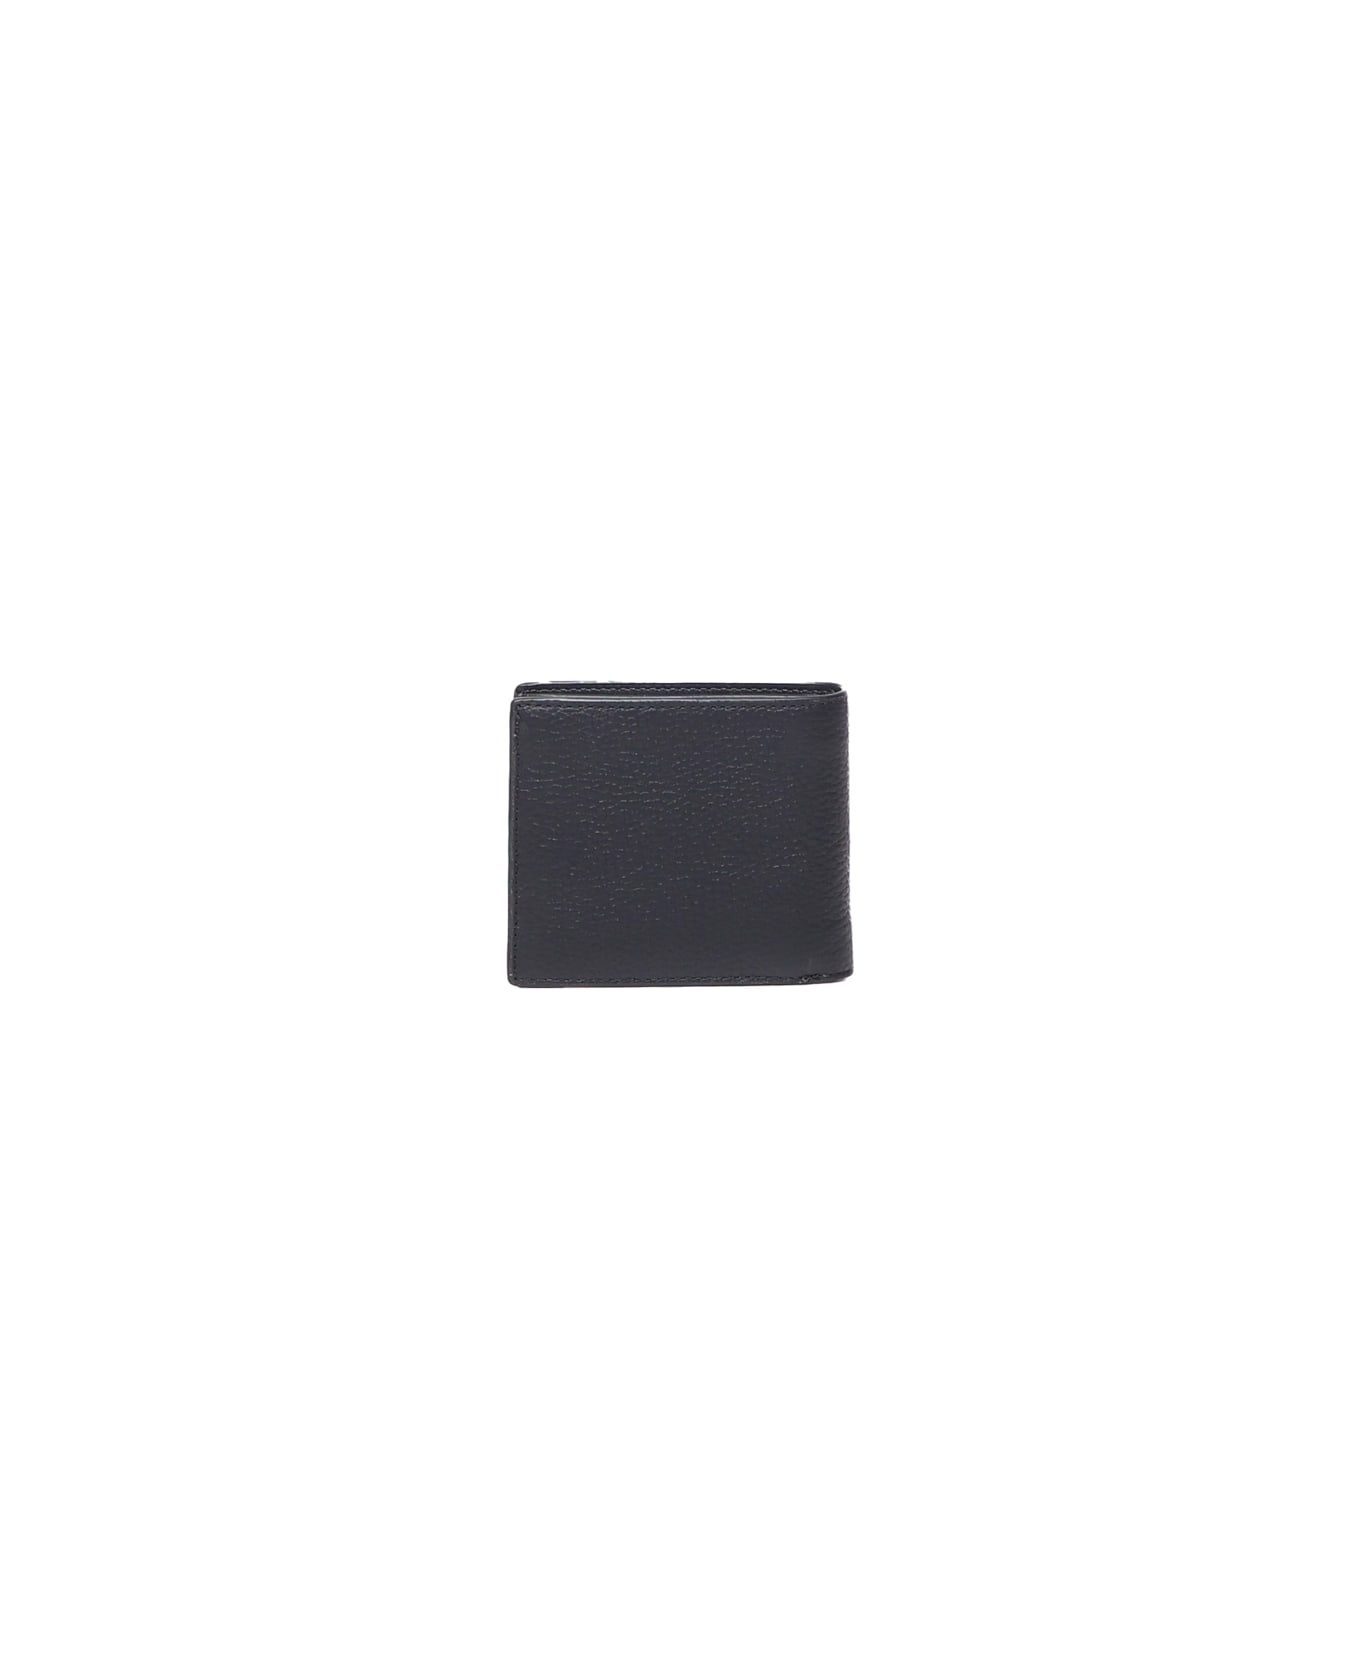 Michael Kors Bi-fold Wallet - Black